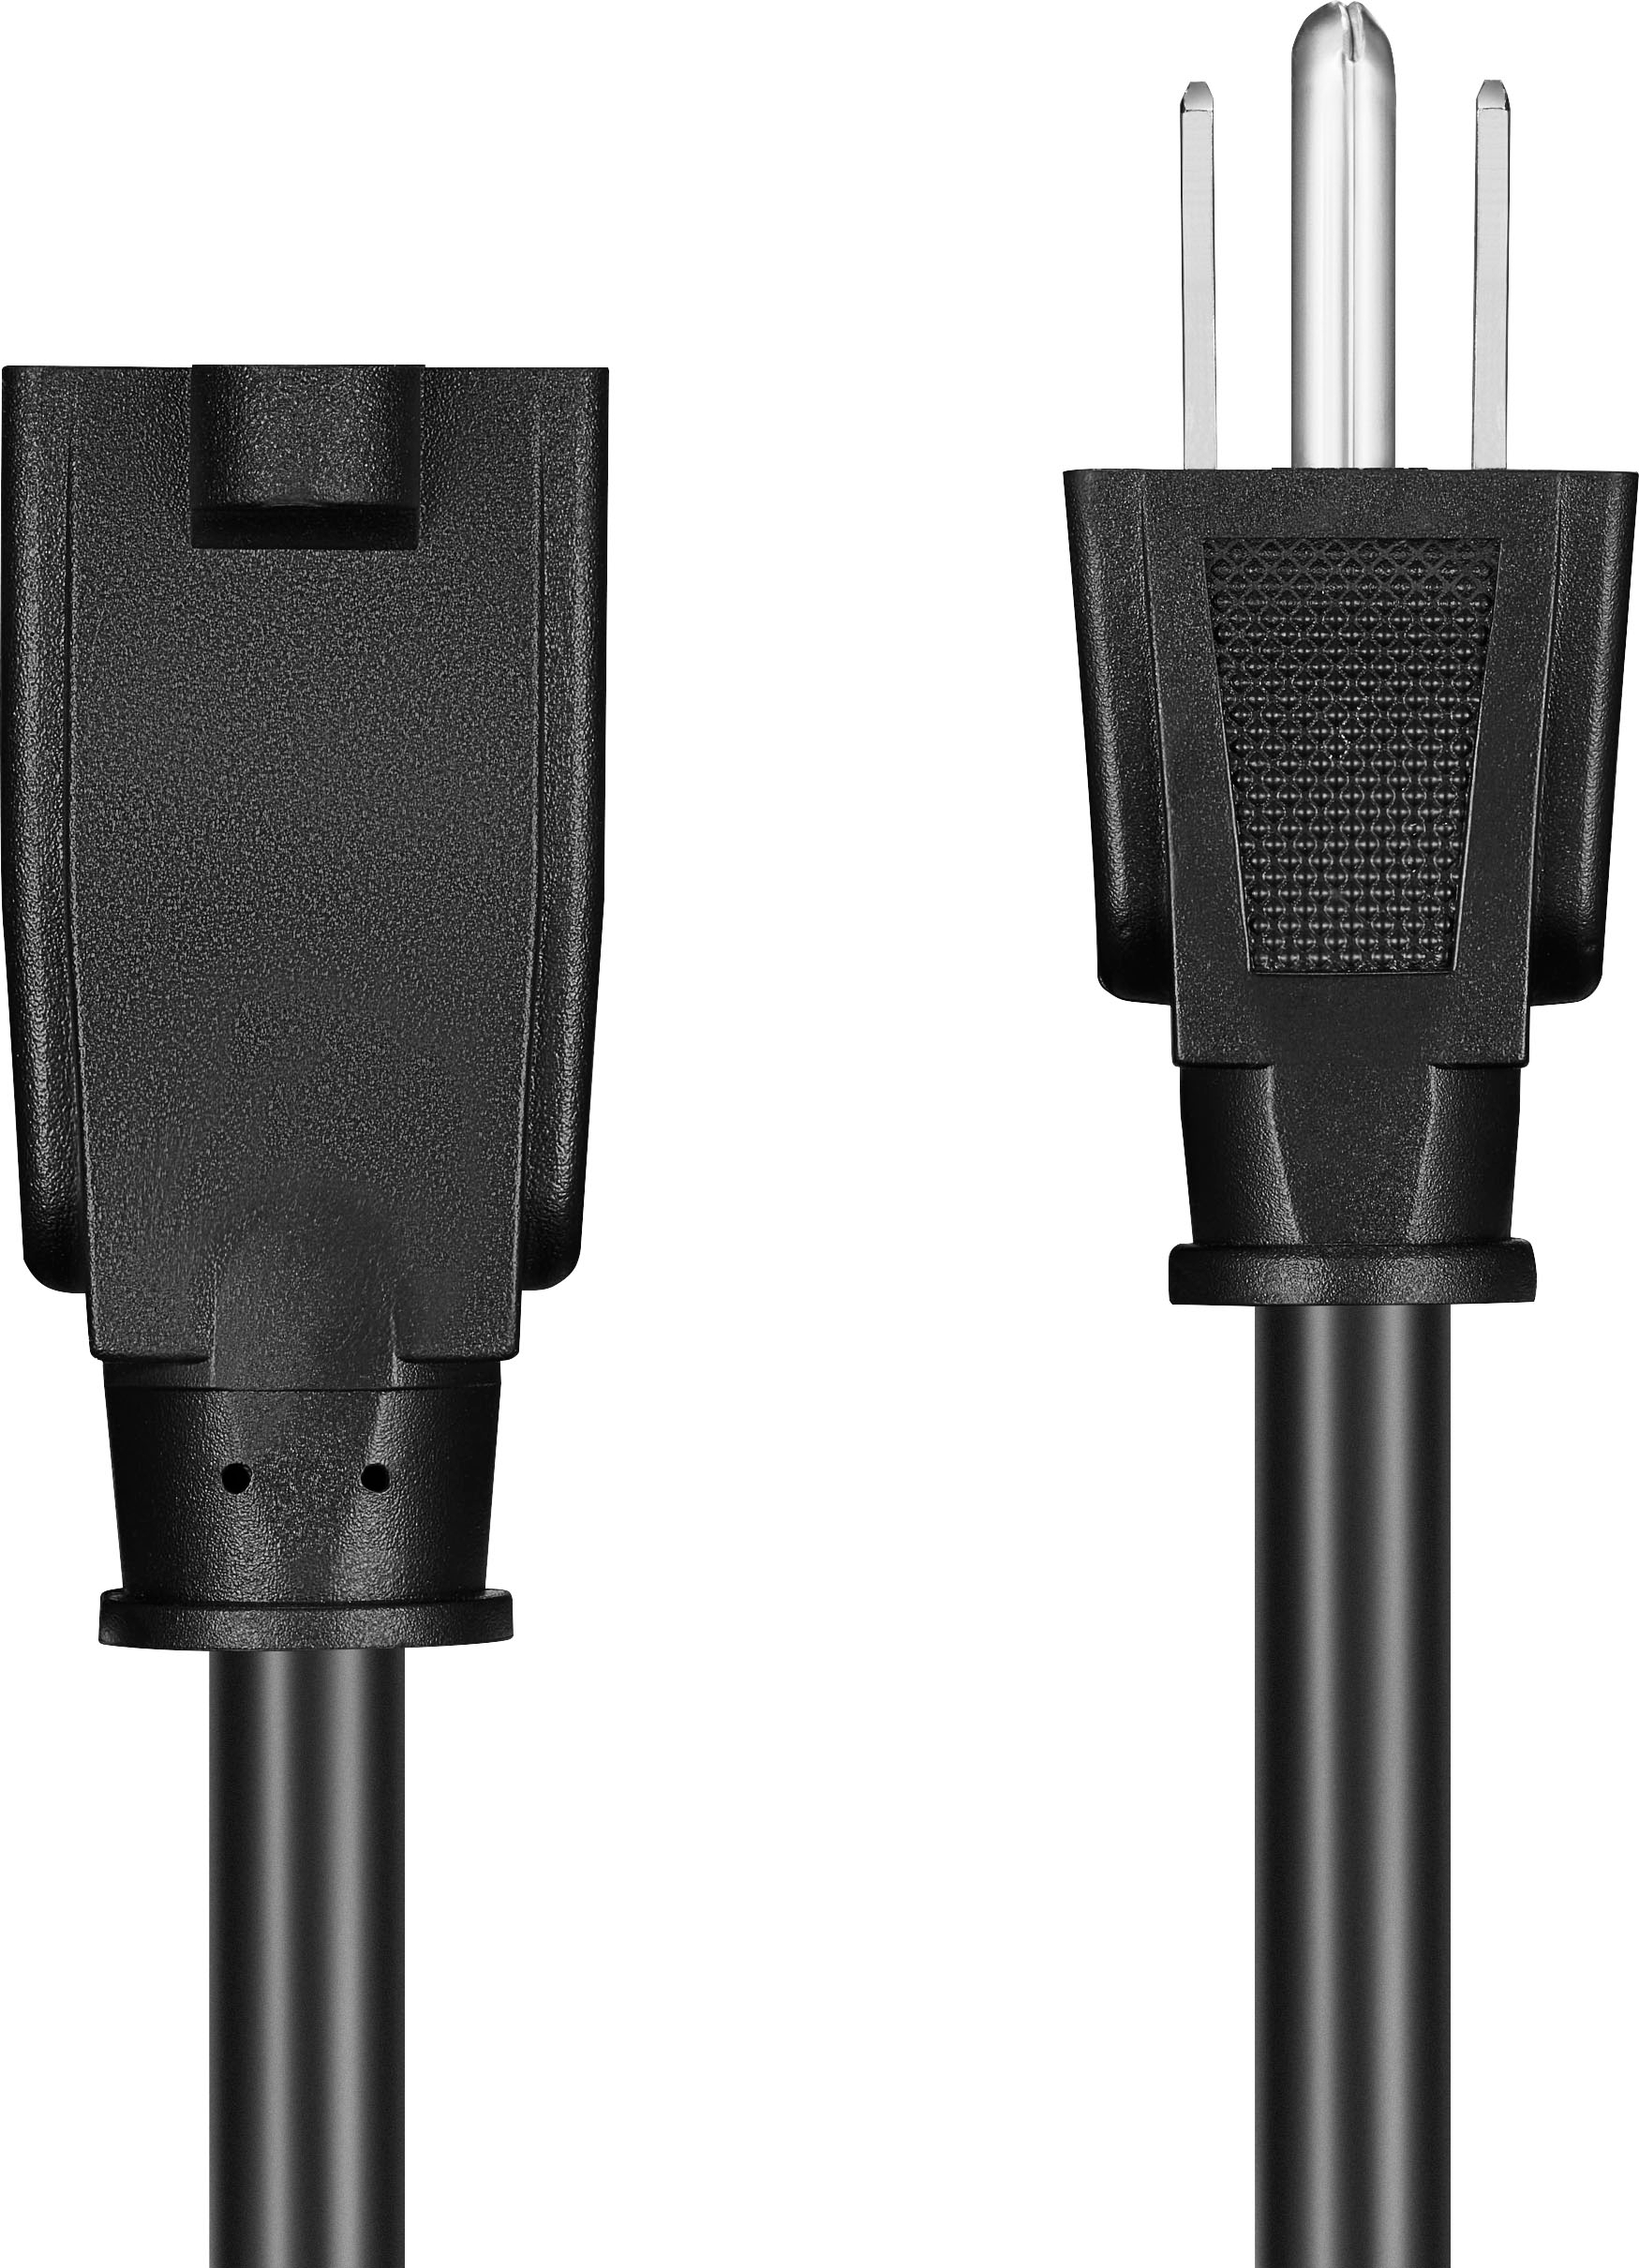 Smart Choice 6' 50 Amp 4-Prong Range Cord Black 5305510956 - Best Buy